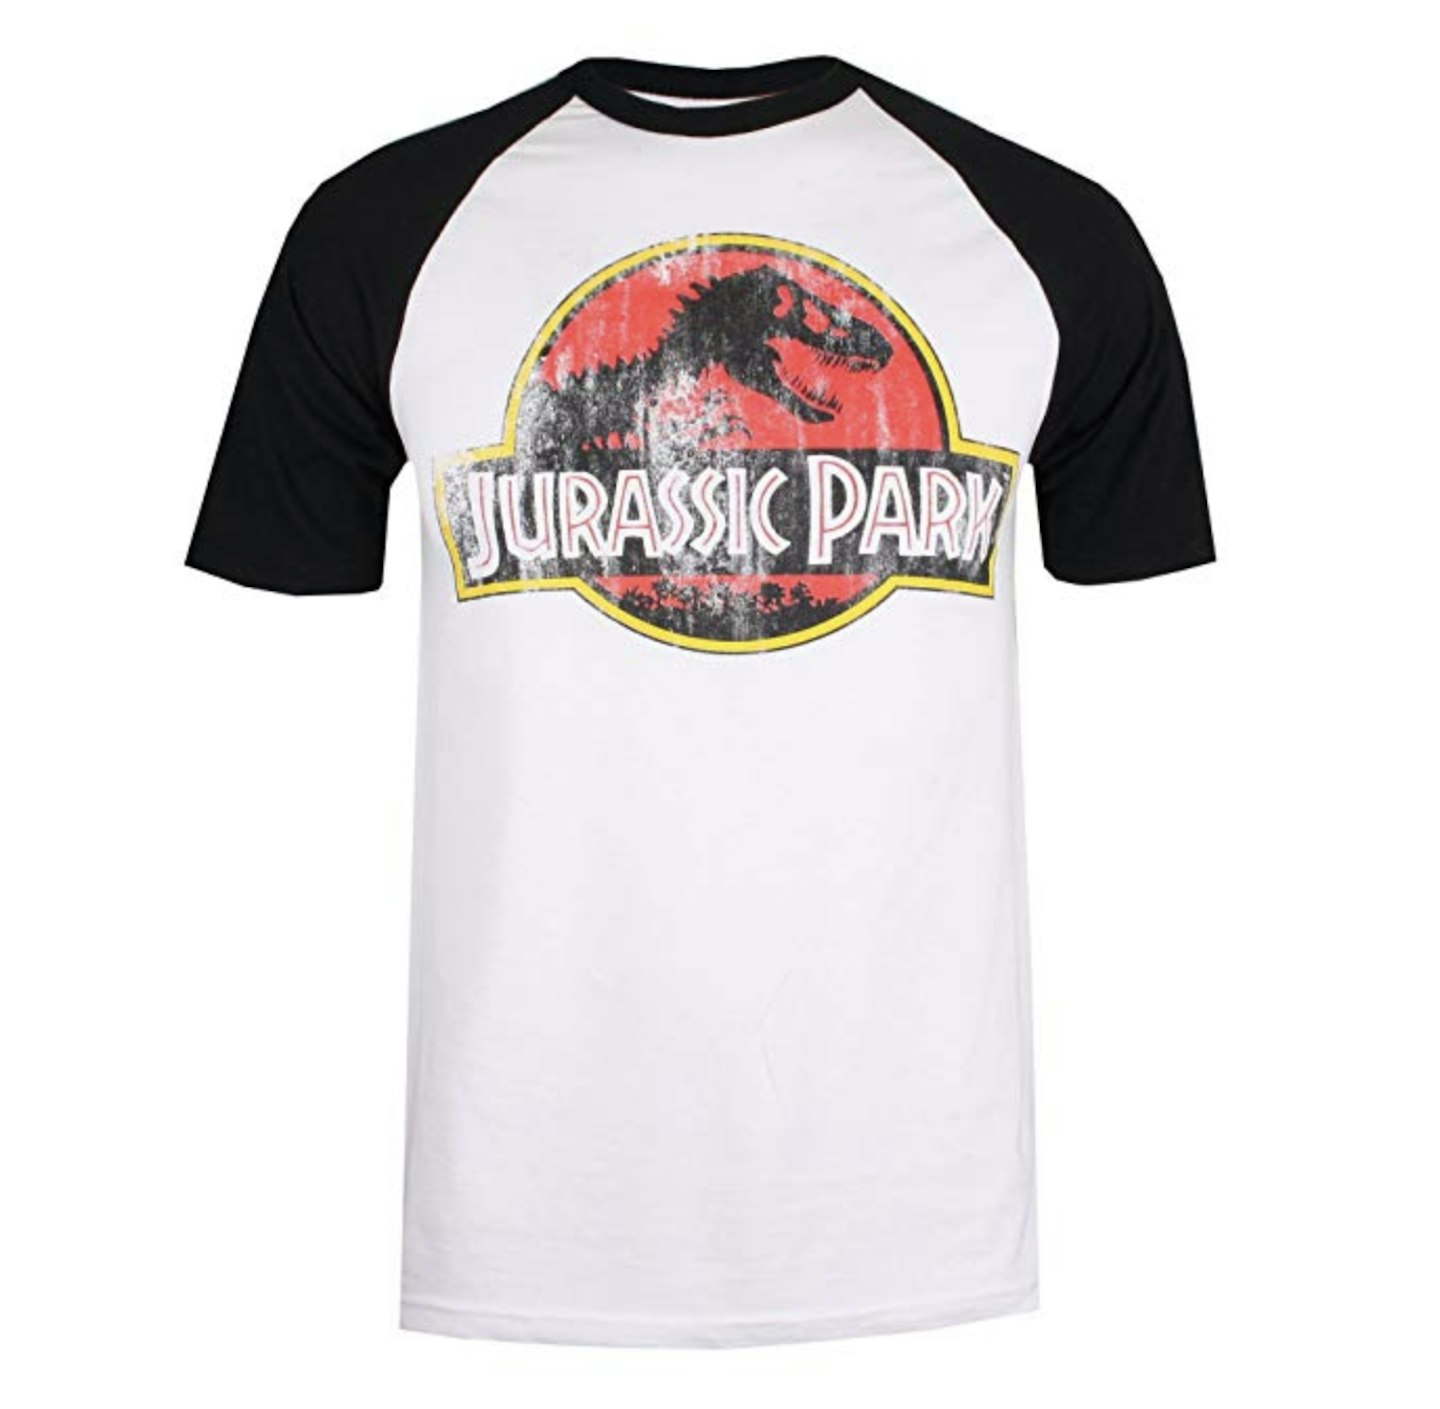 Jurassic Park Distressed Logo T-Shirt, £12.99